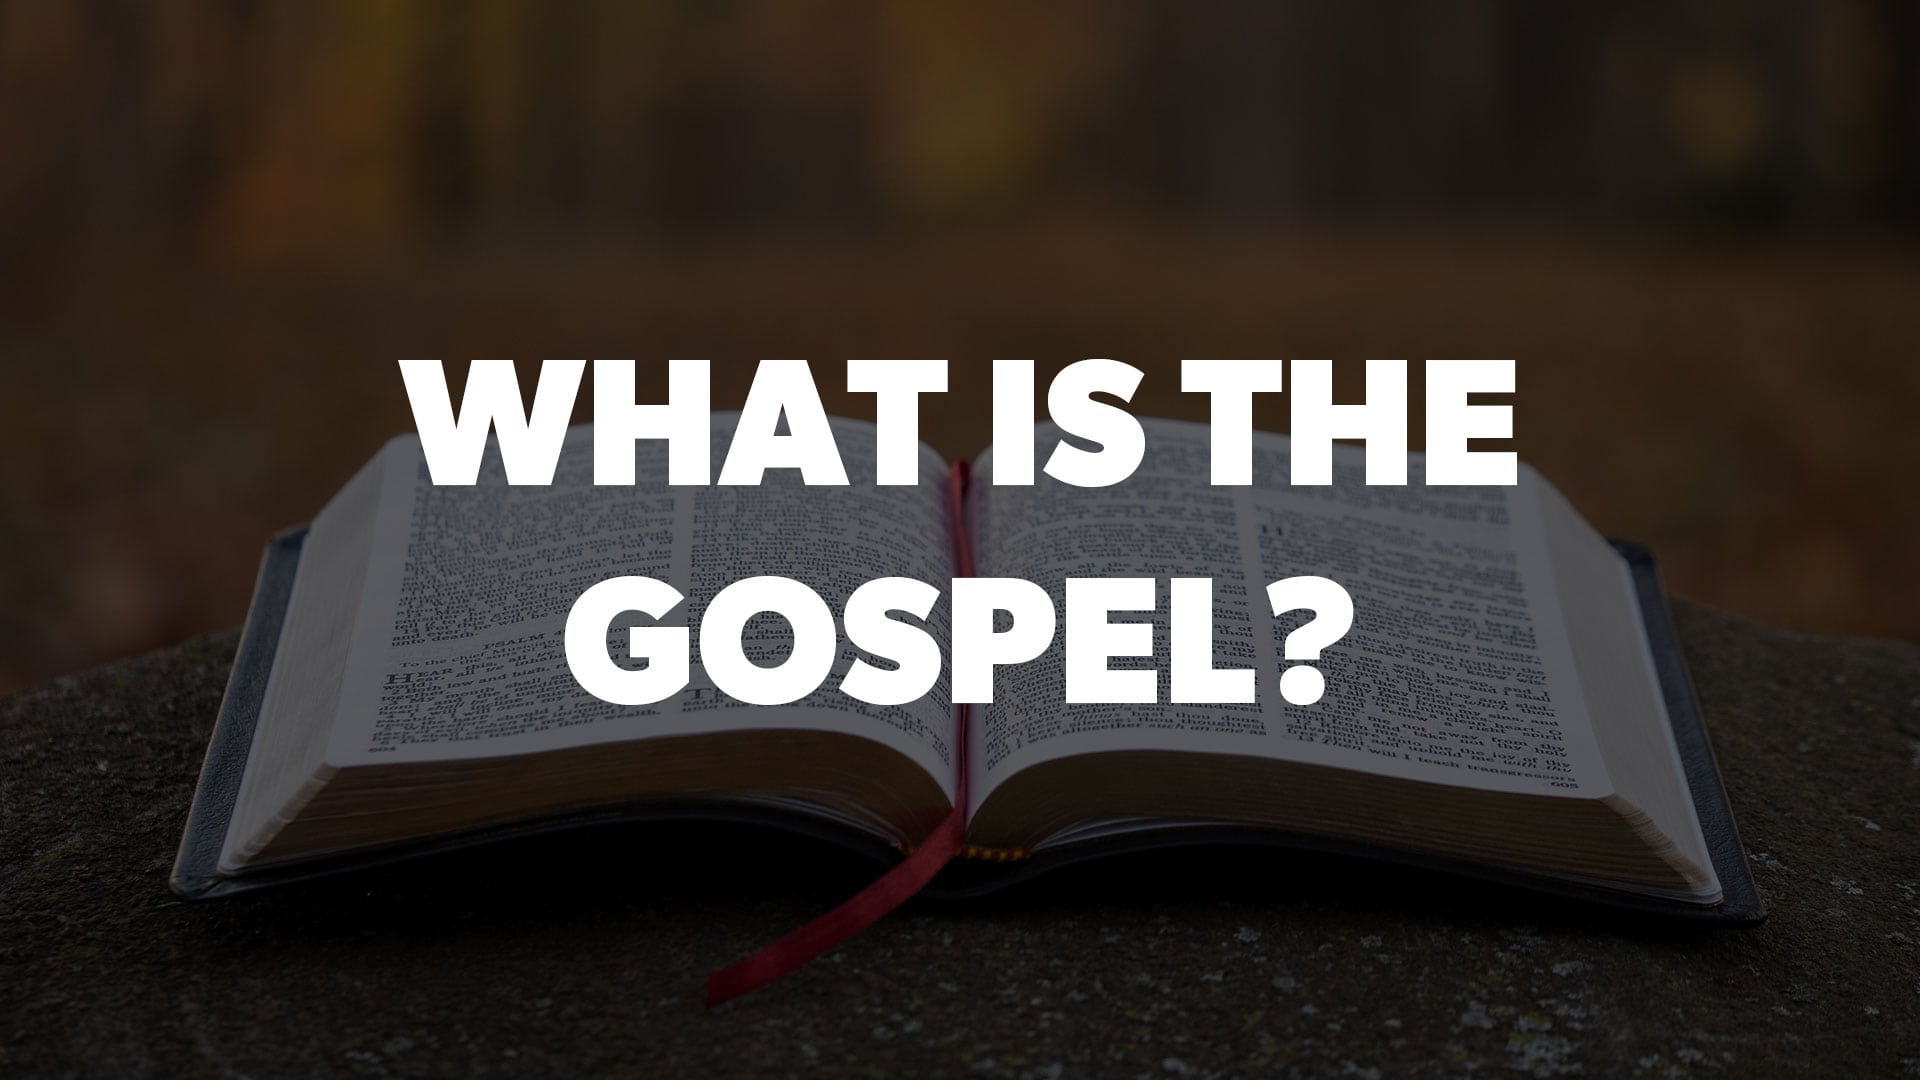 define as gospel